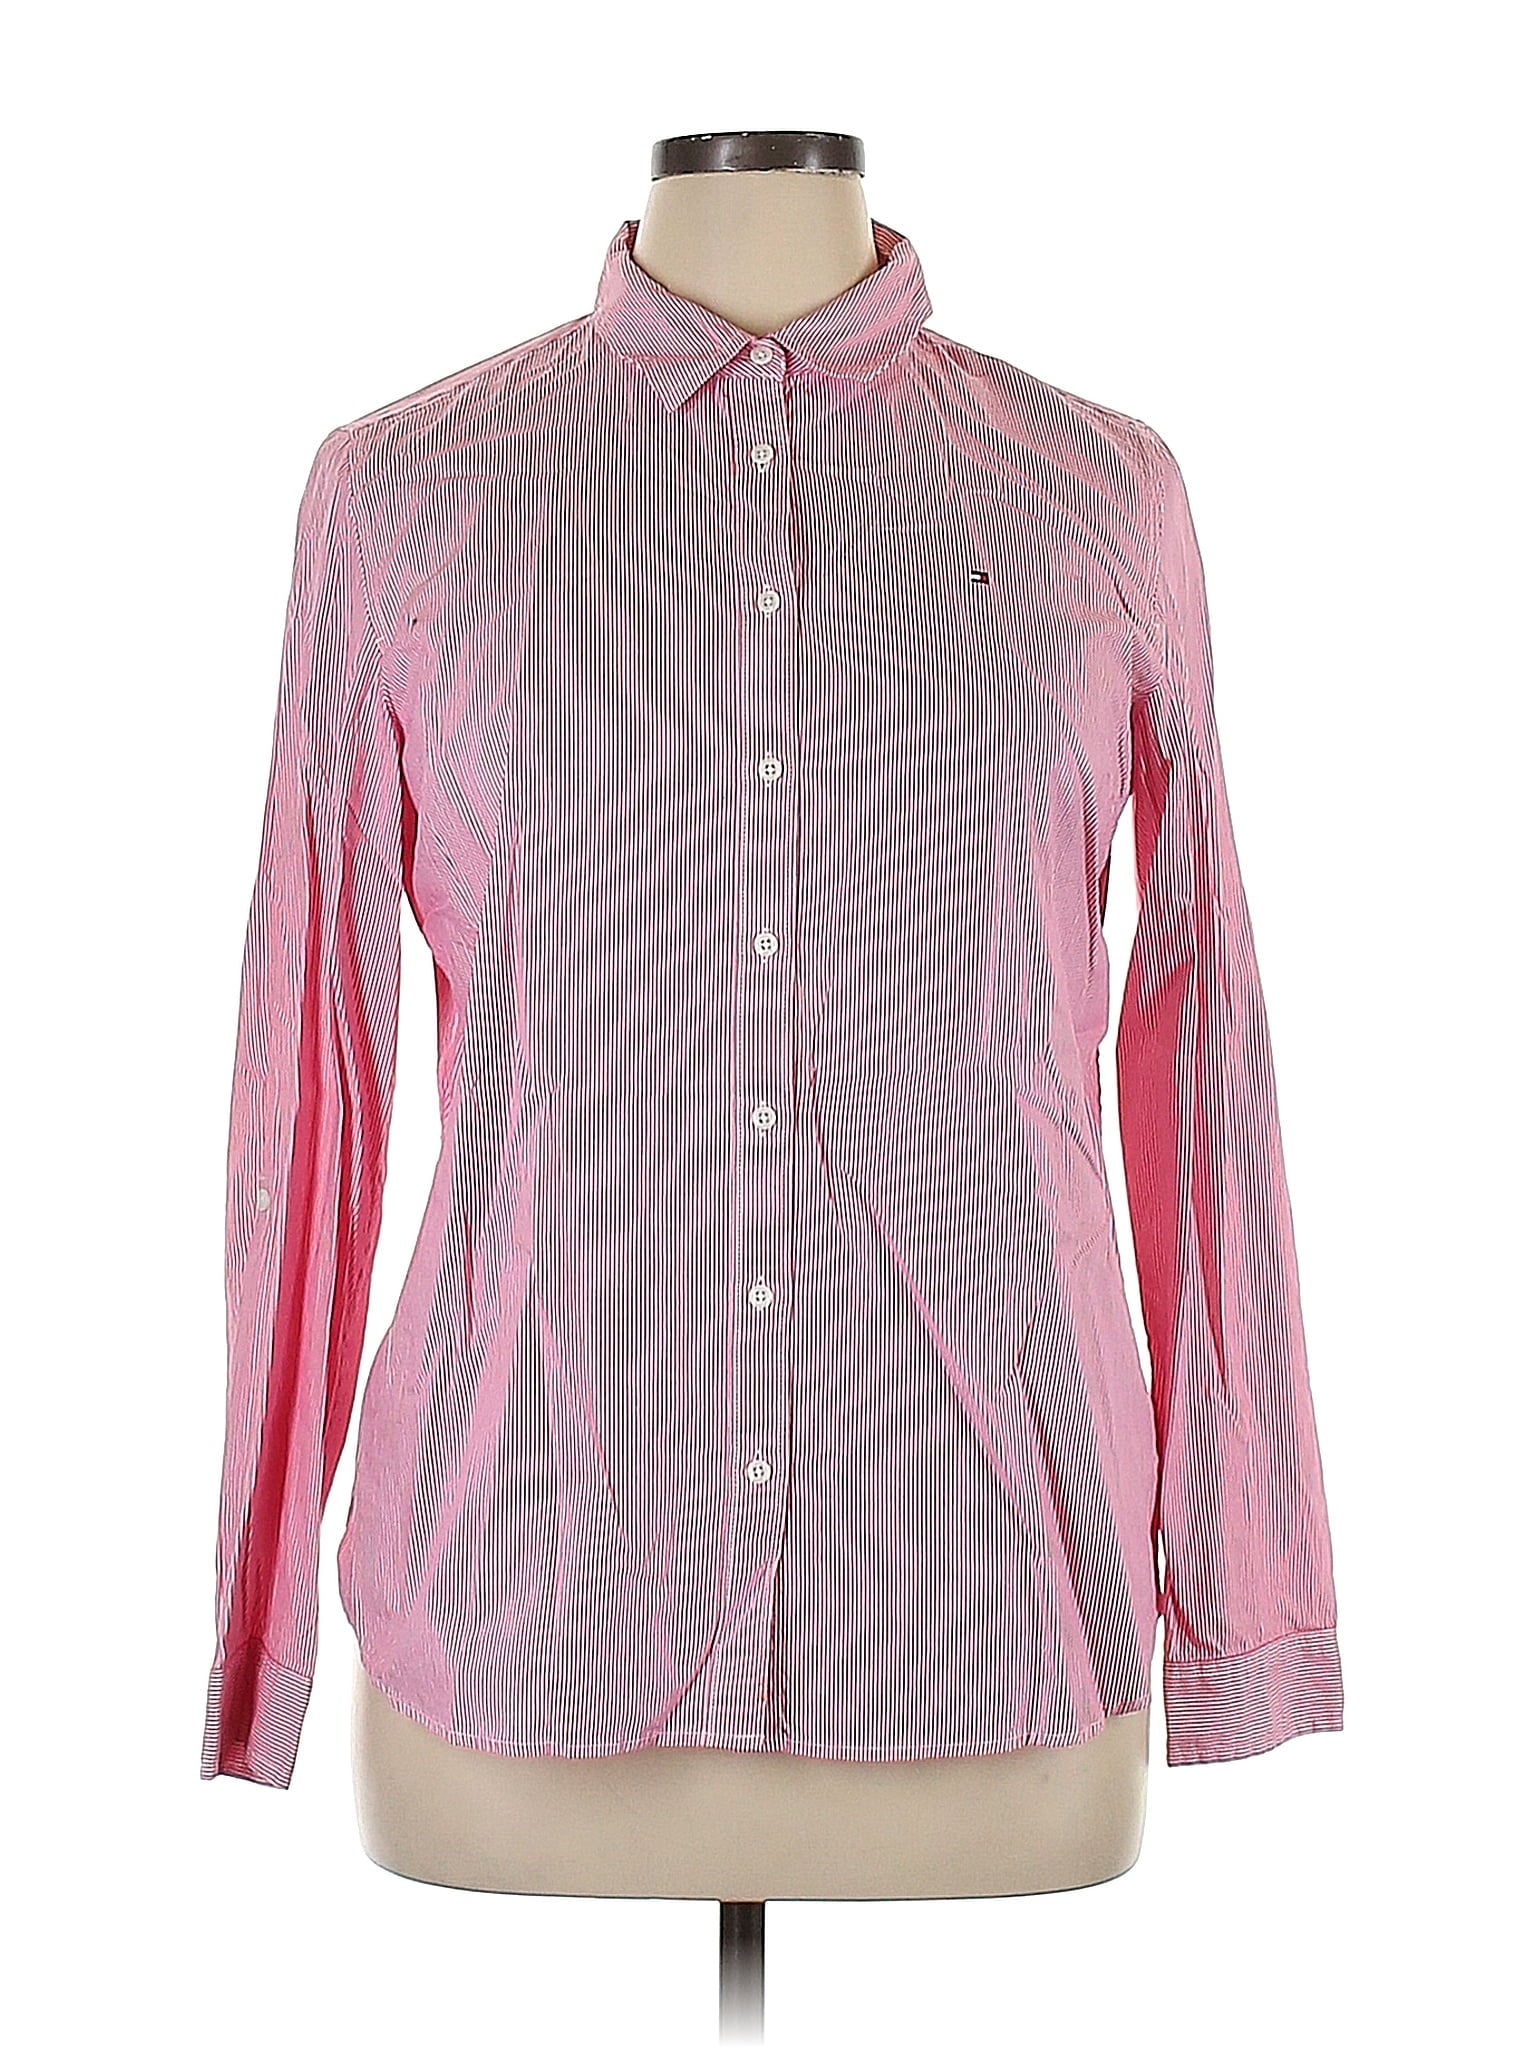 Long Sleeve Button Down Shirt size - XL